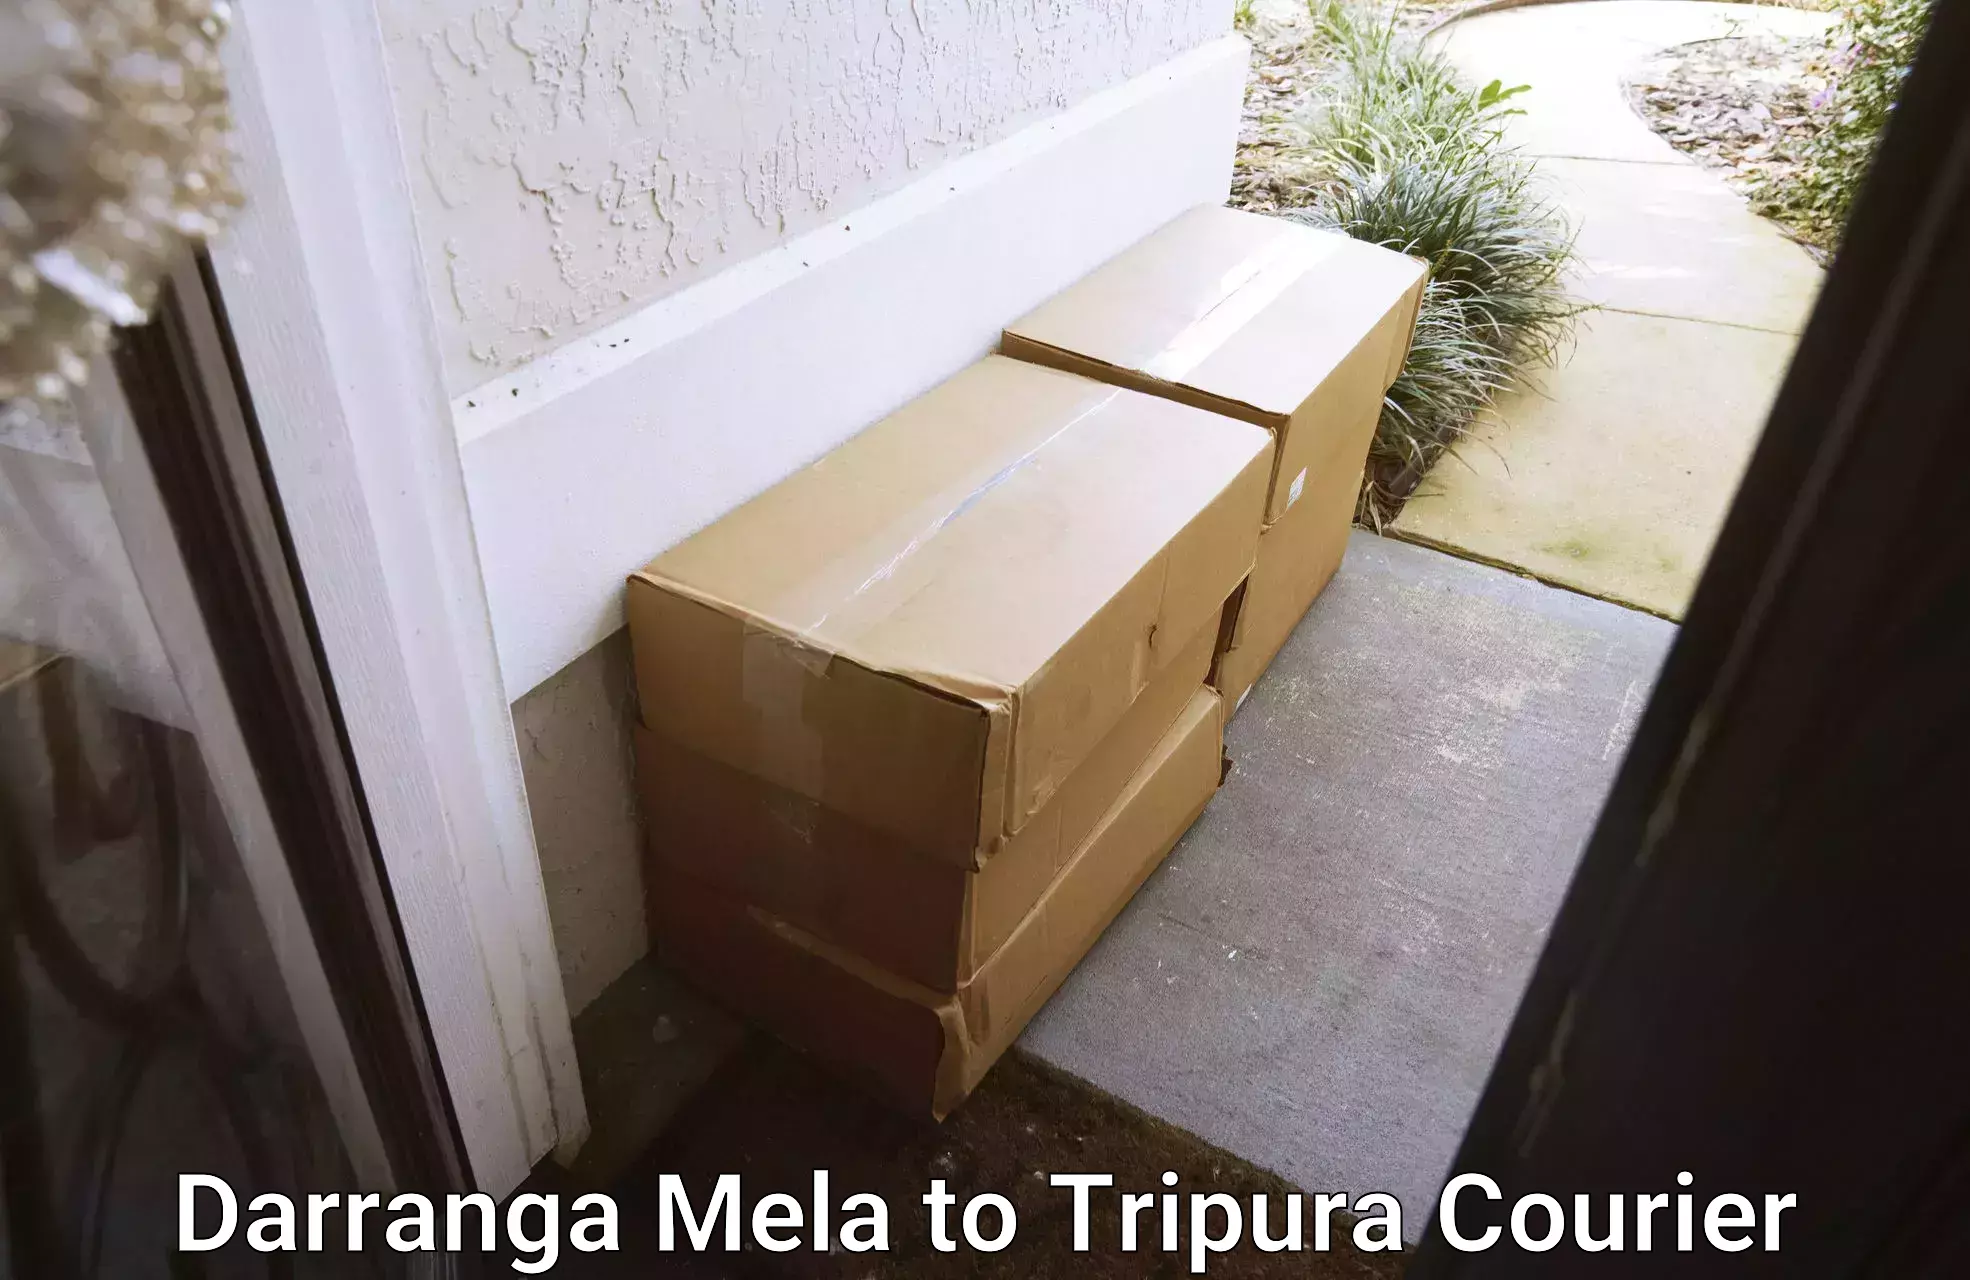 Global courier networks Darranga Mela to Amarpur